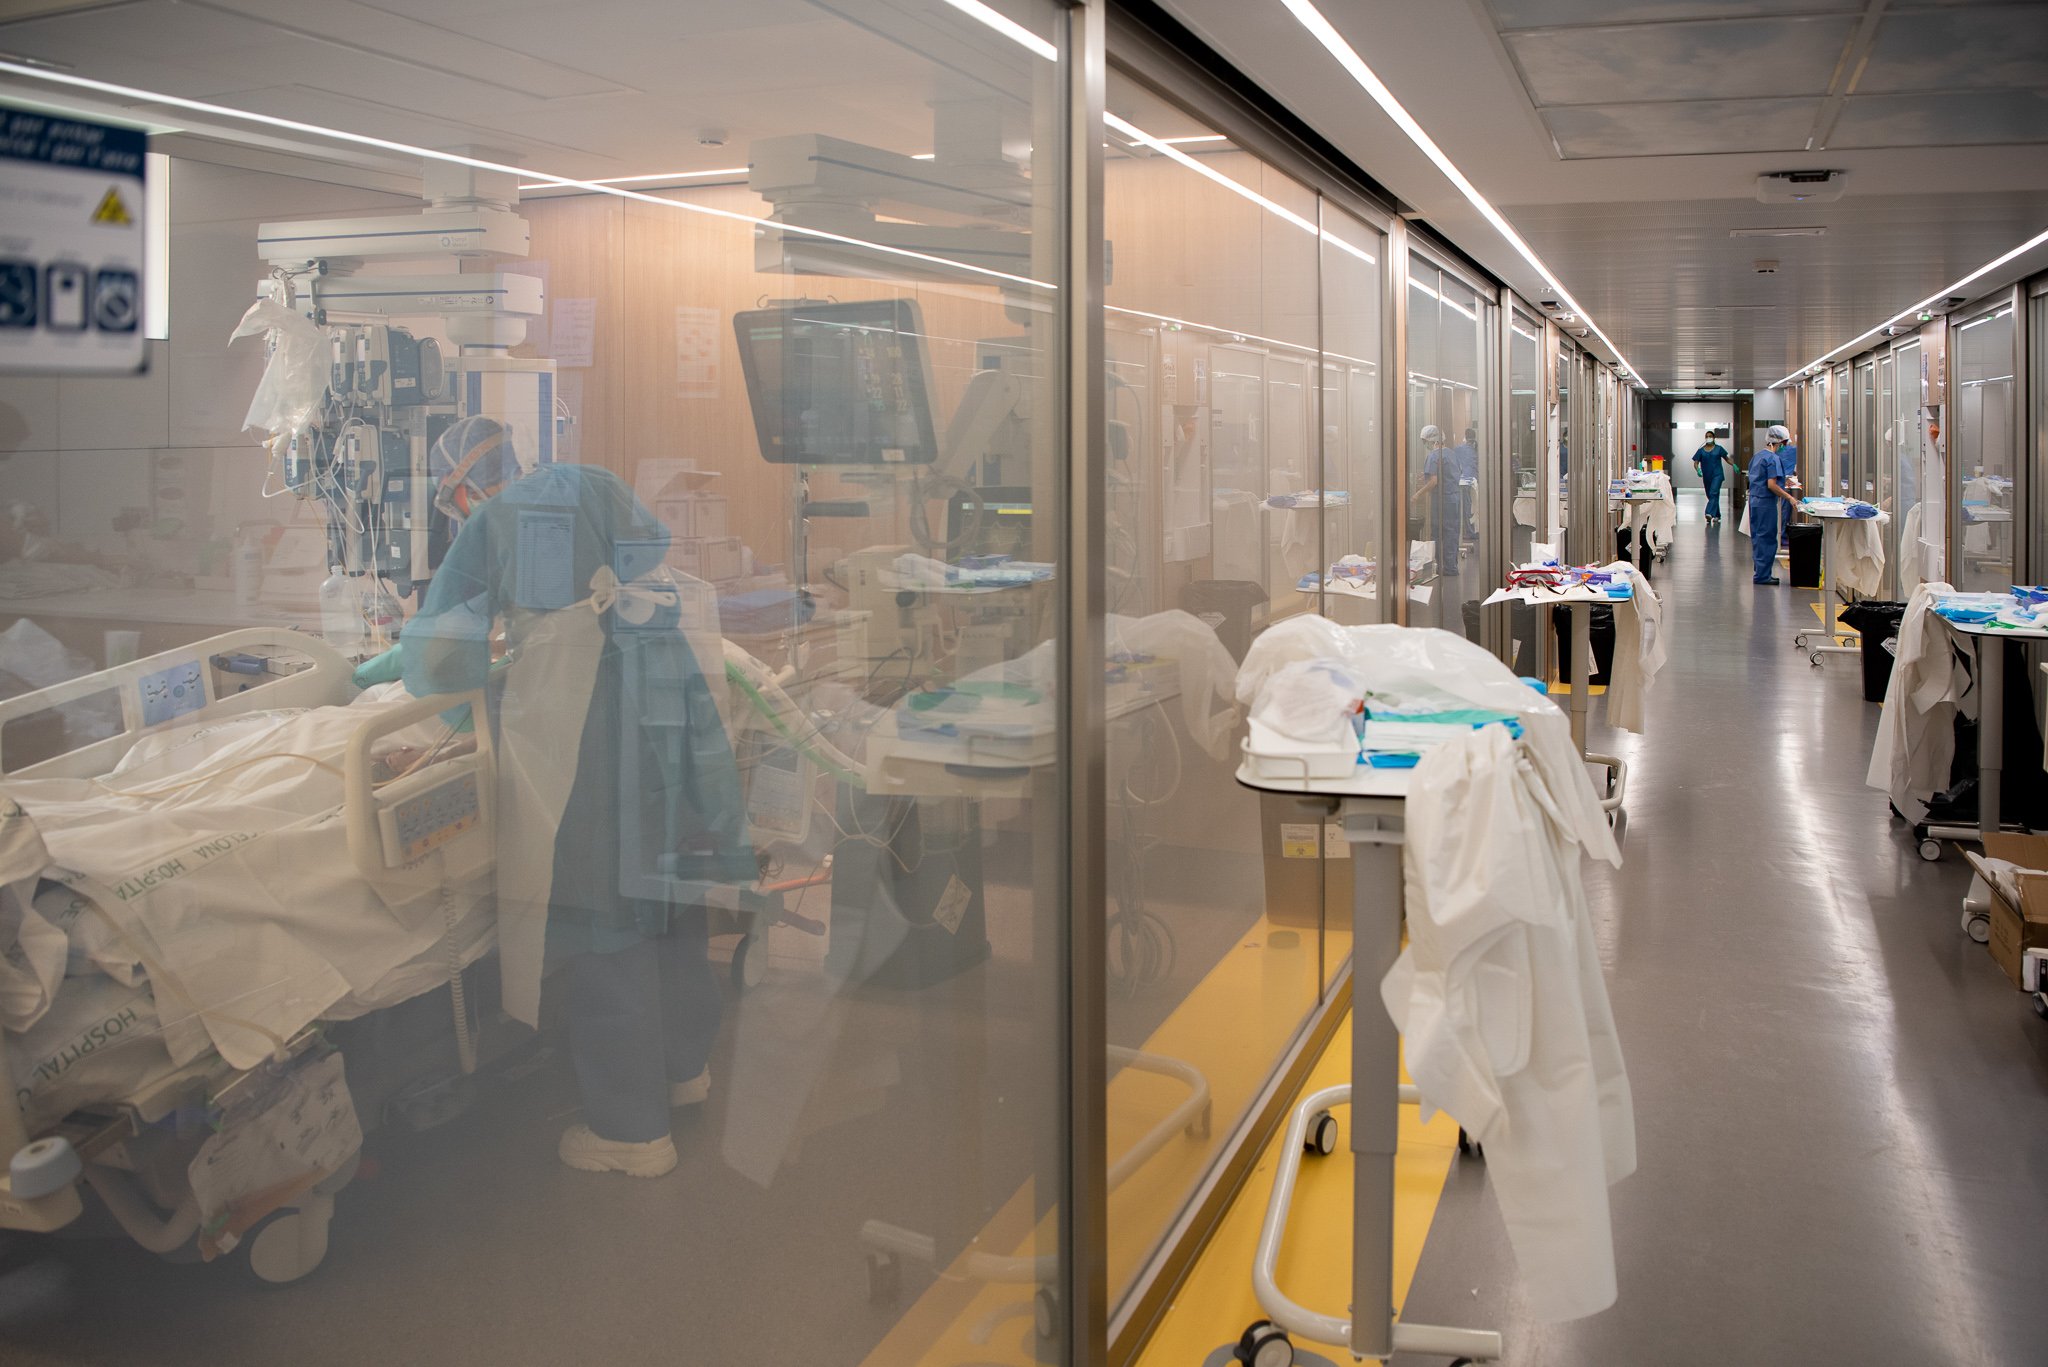 Catalonia's intensive care units, running at 200% of capacity due to coronavirus